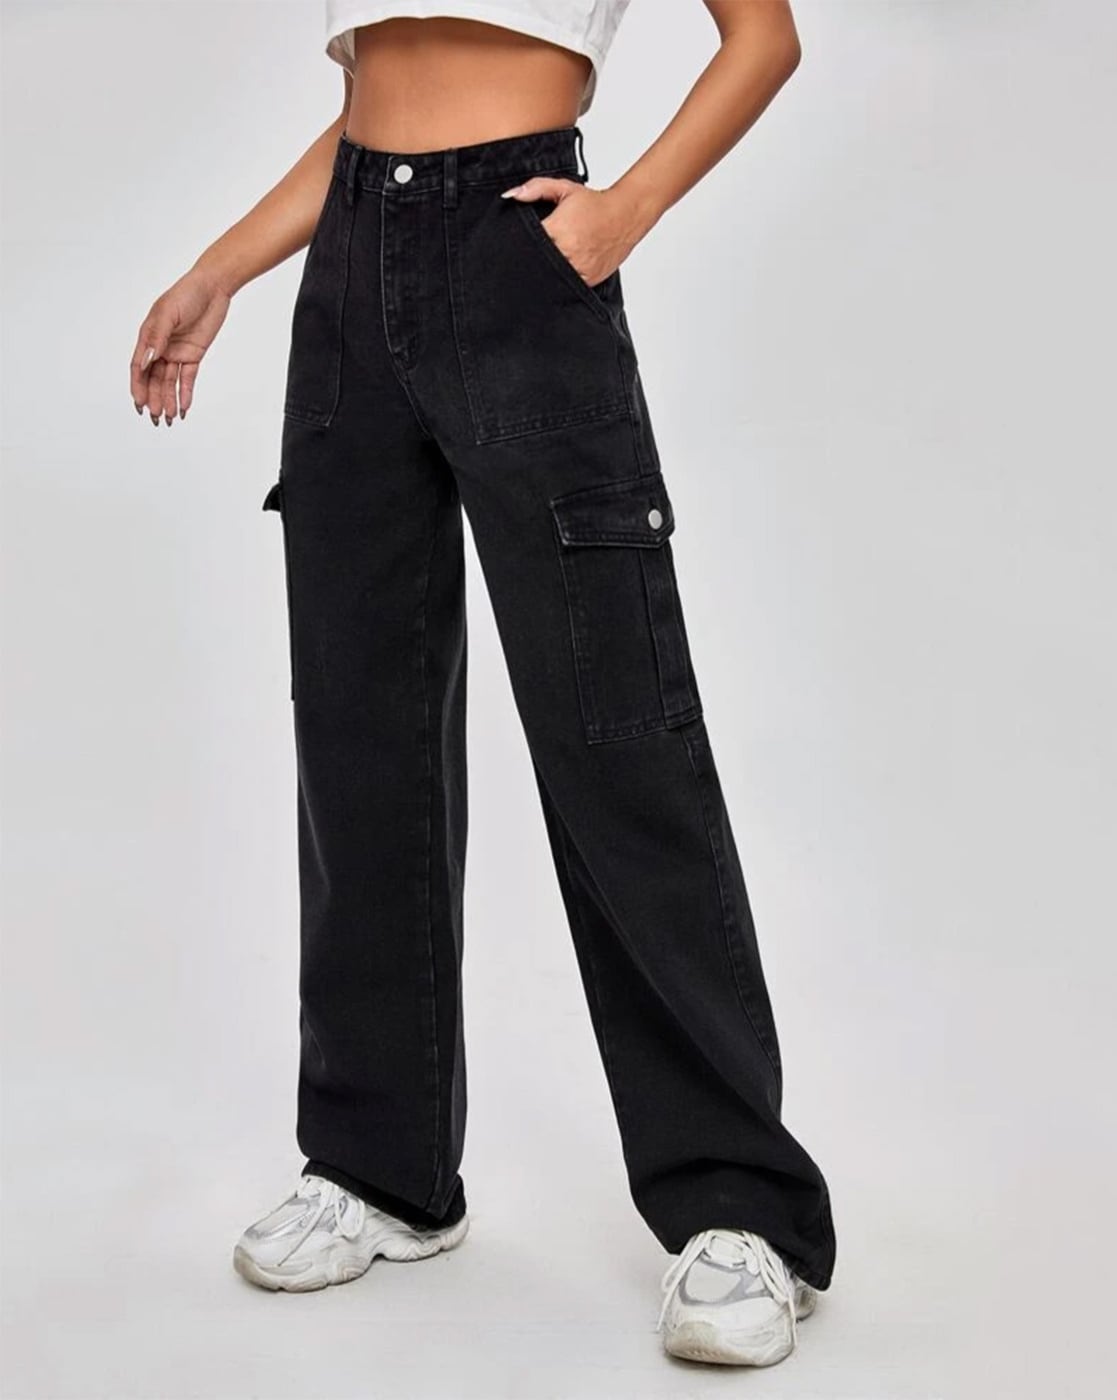 Buy Black Jeans & Jeggings for Women by Zizvo Online